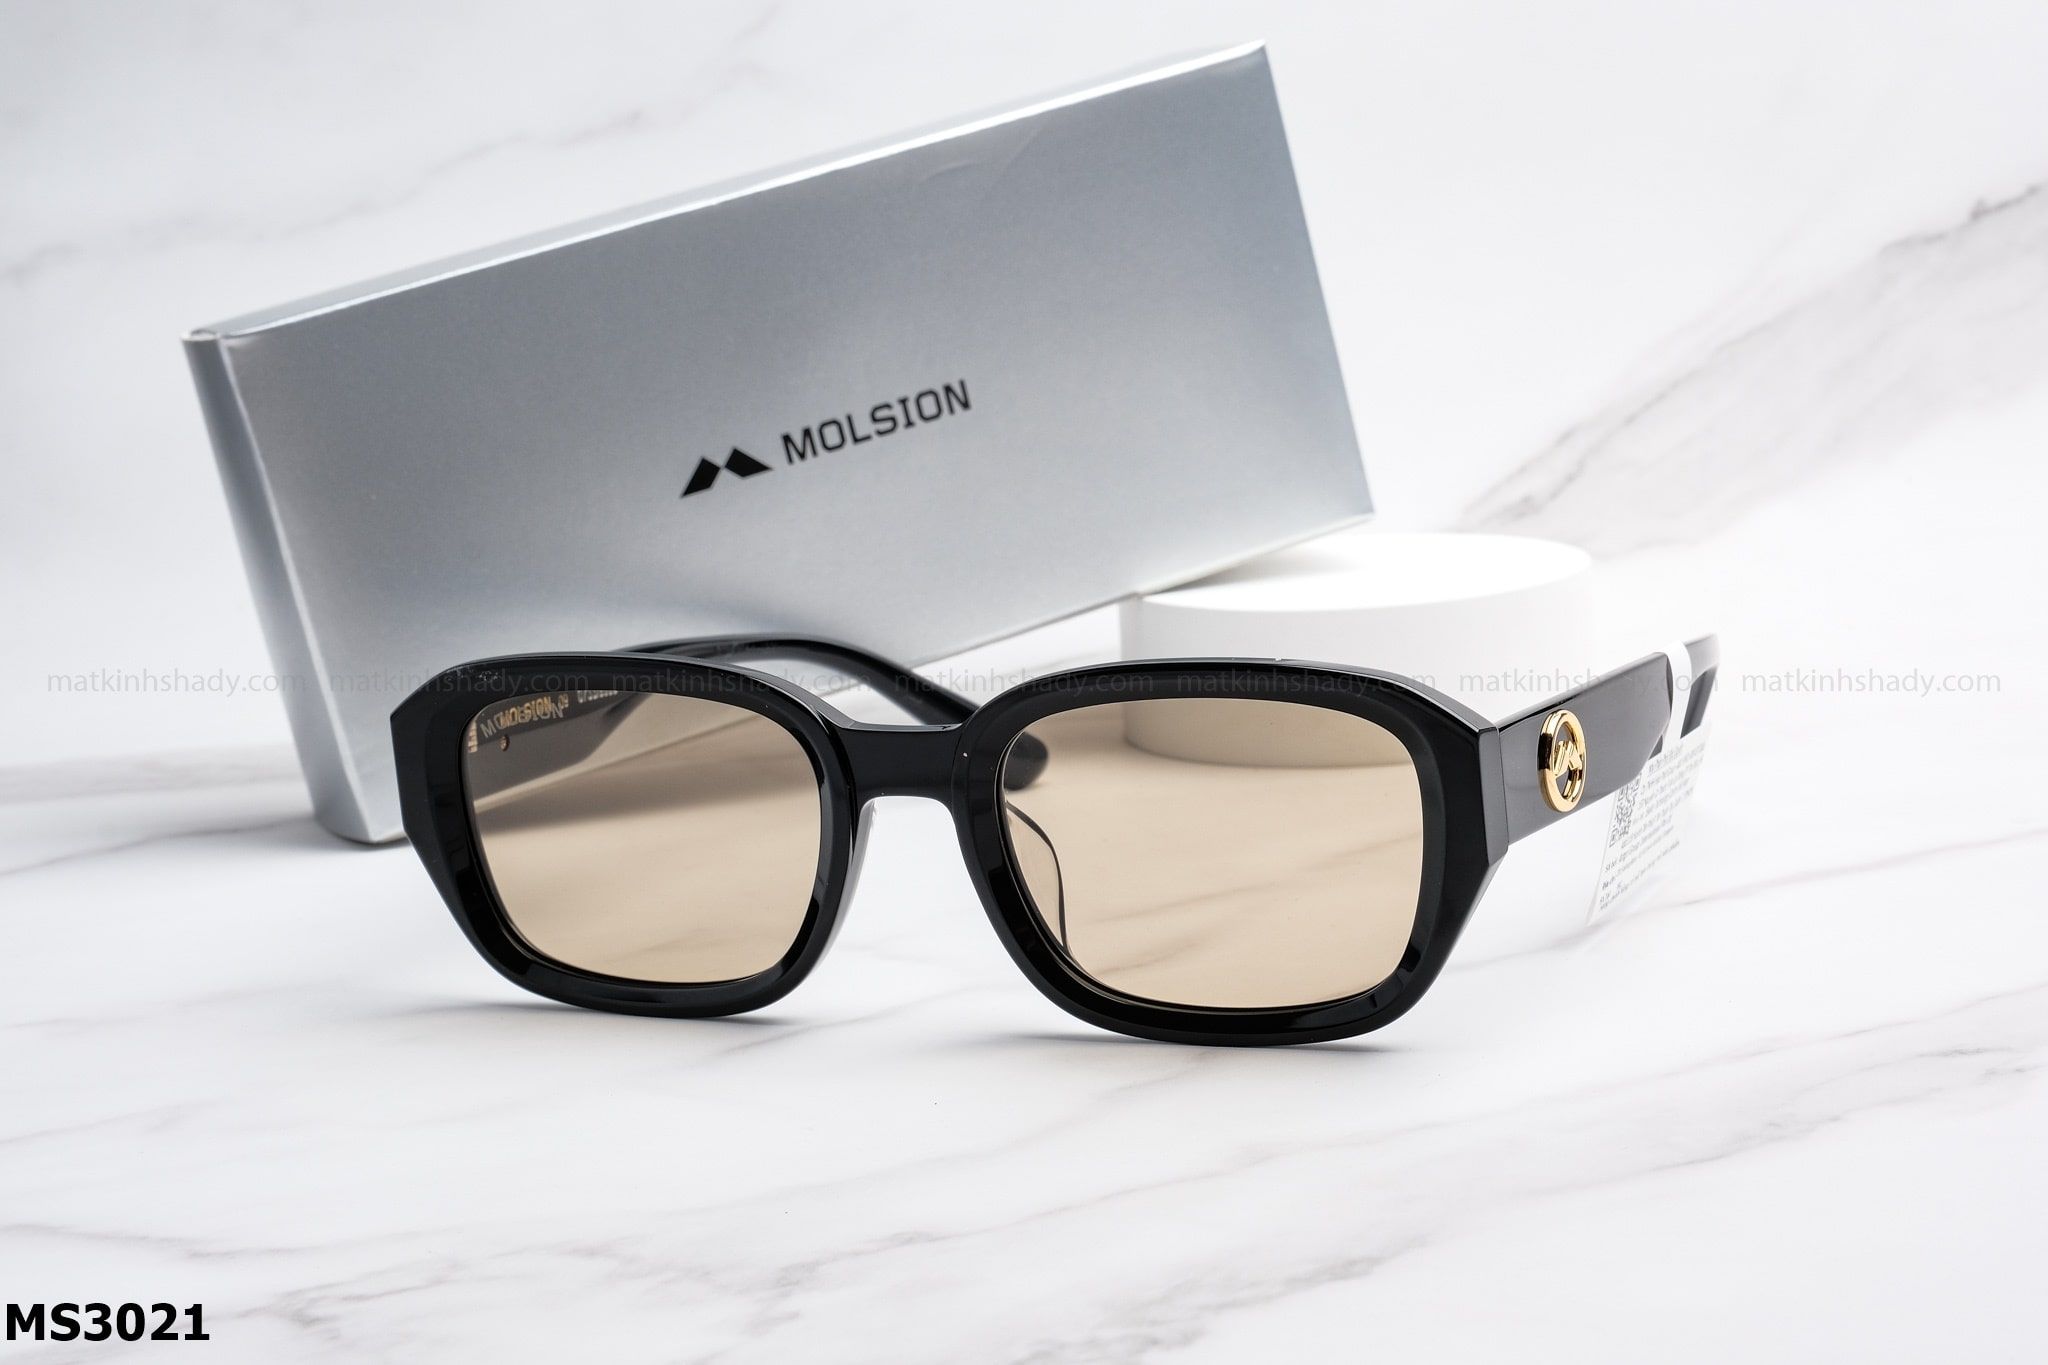  Molsion Eyewear - Sunglasses - MS3021 